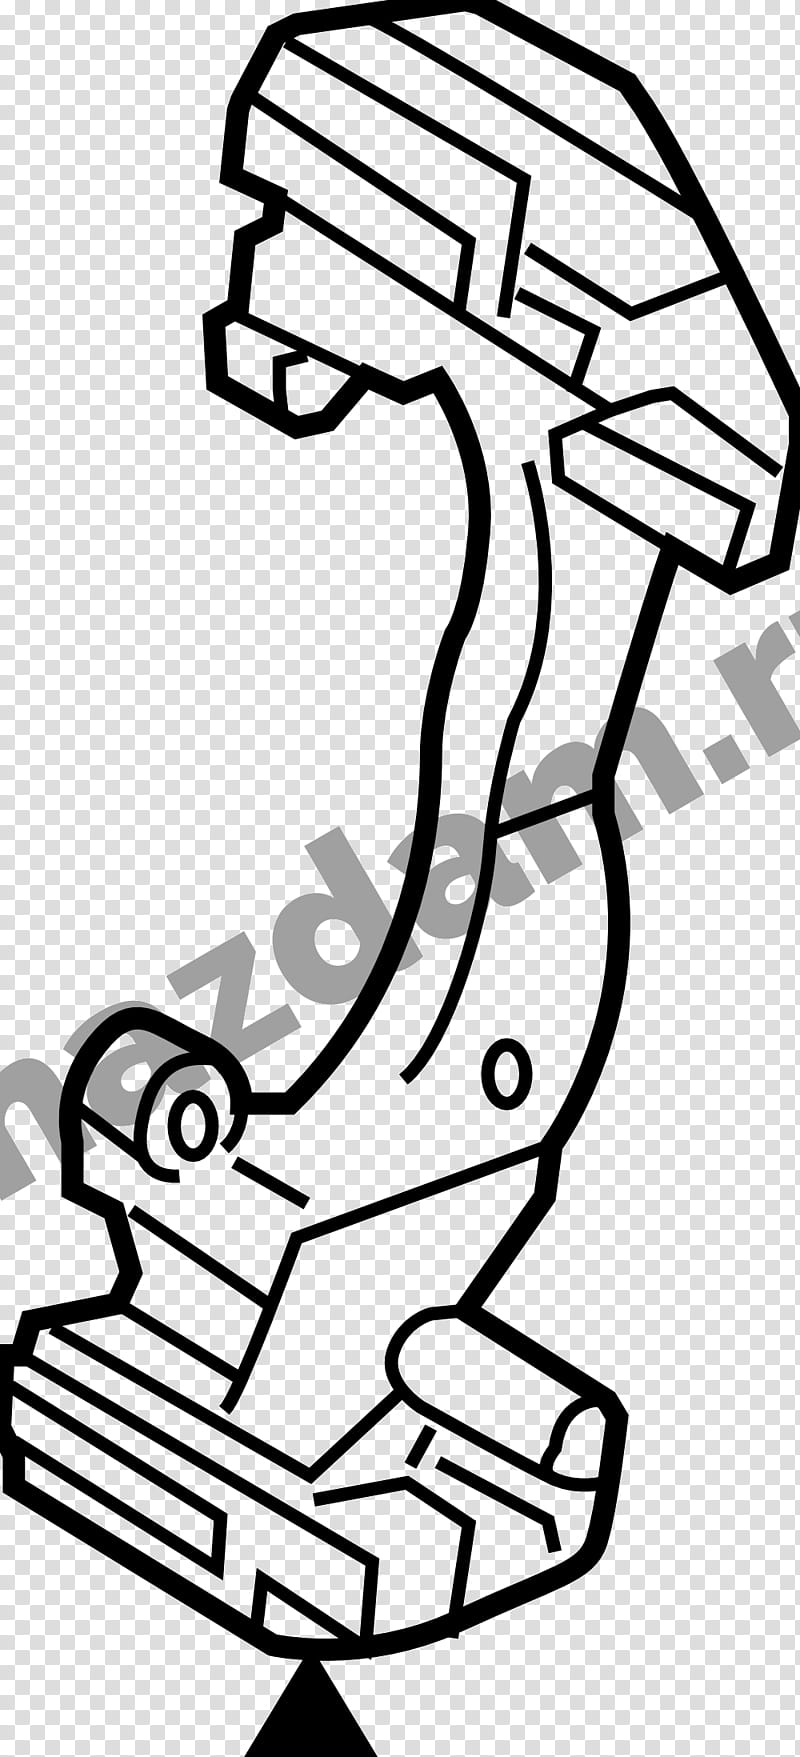 Drawing White, Mazda3, Line Art, Cartoon, Mazda Motor Corporation, Shoe, Disc Brake, Angle, Black, Black And White transparent background PNG clipart